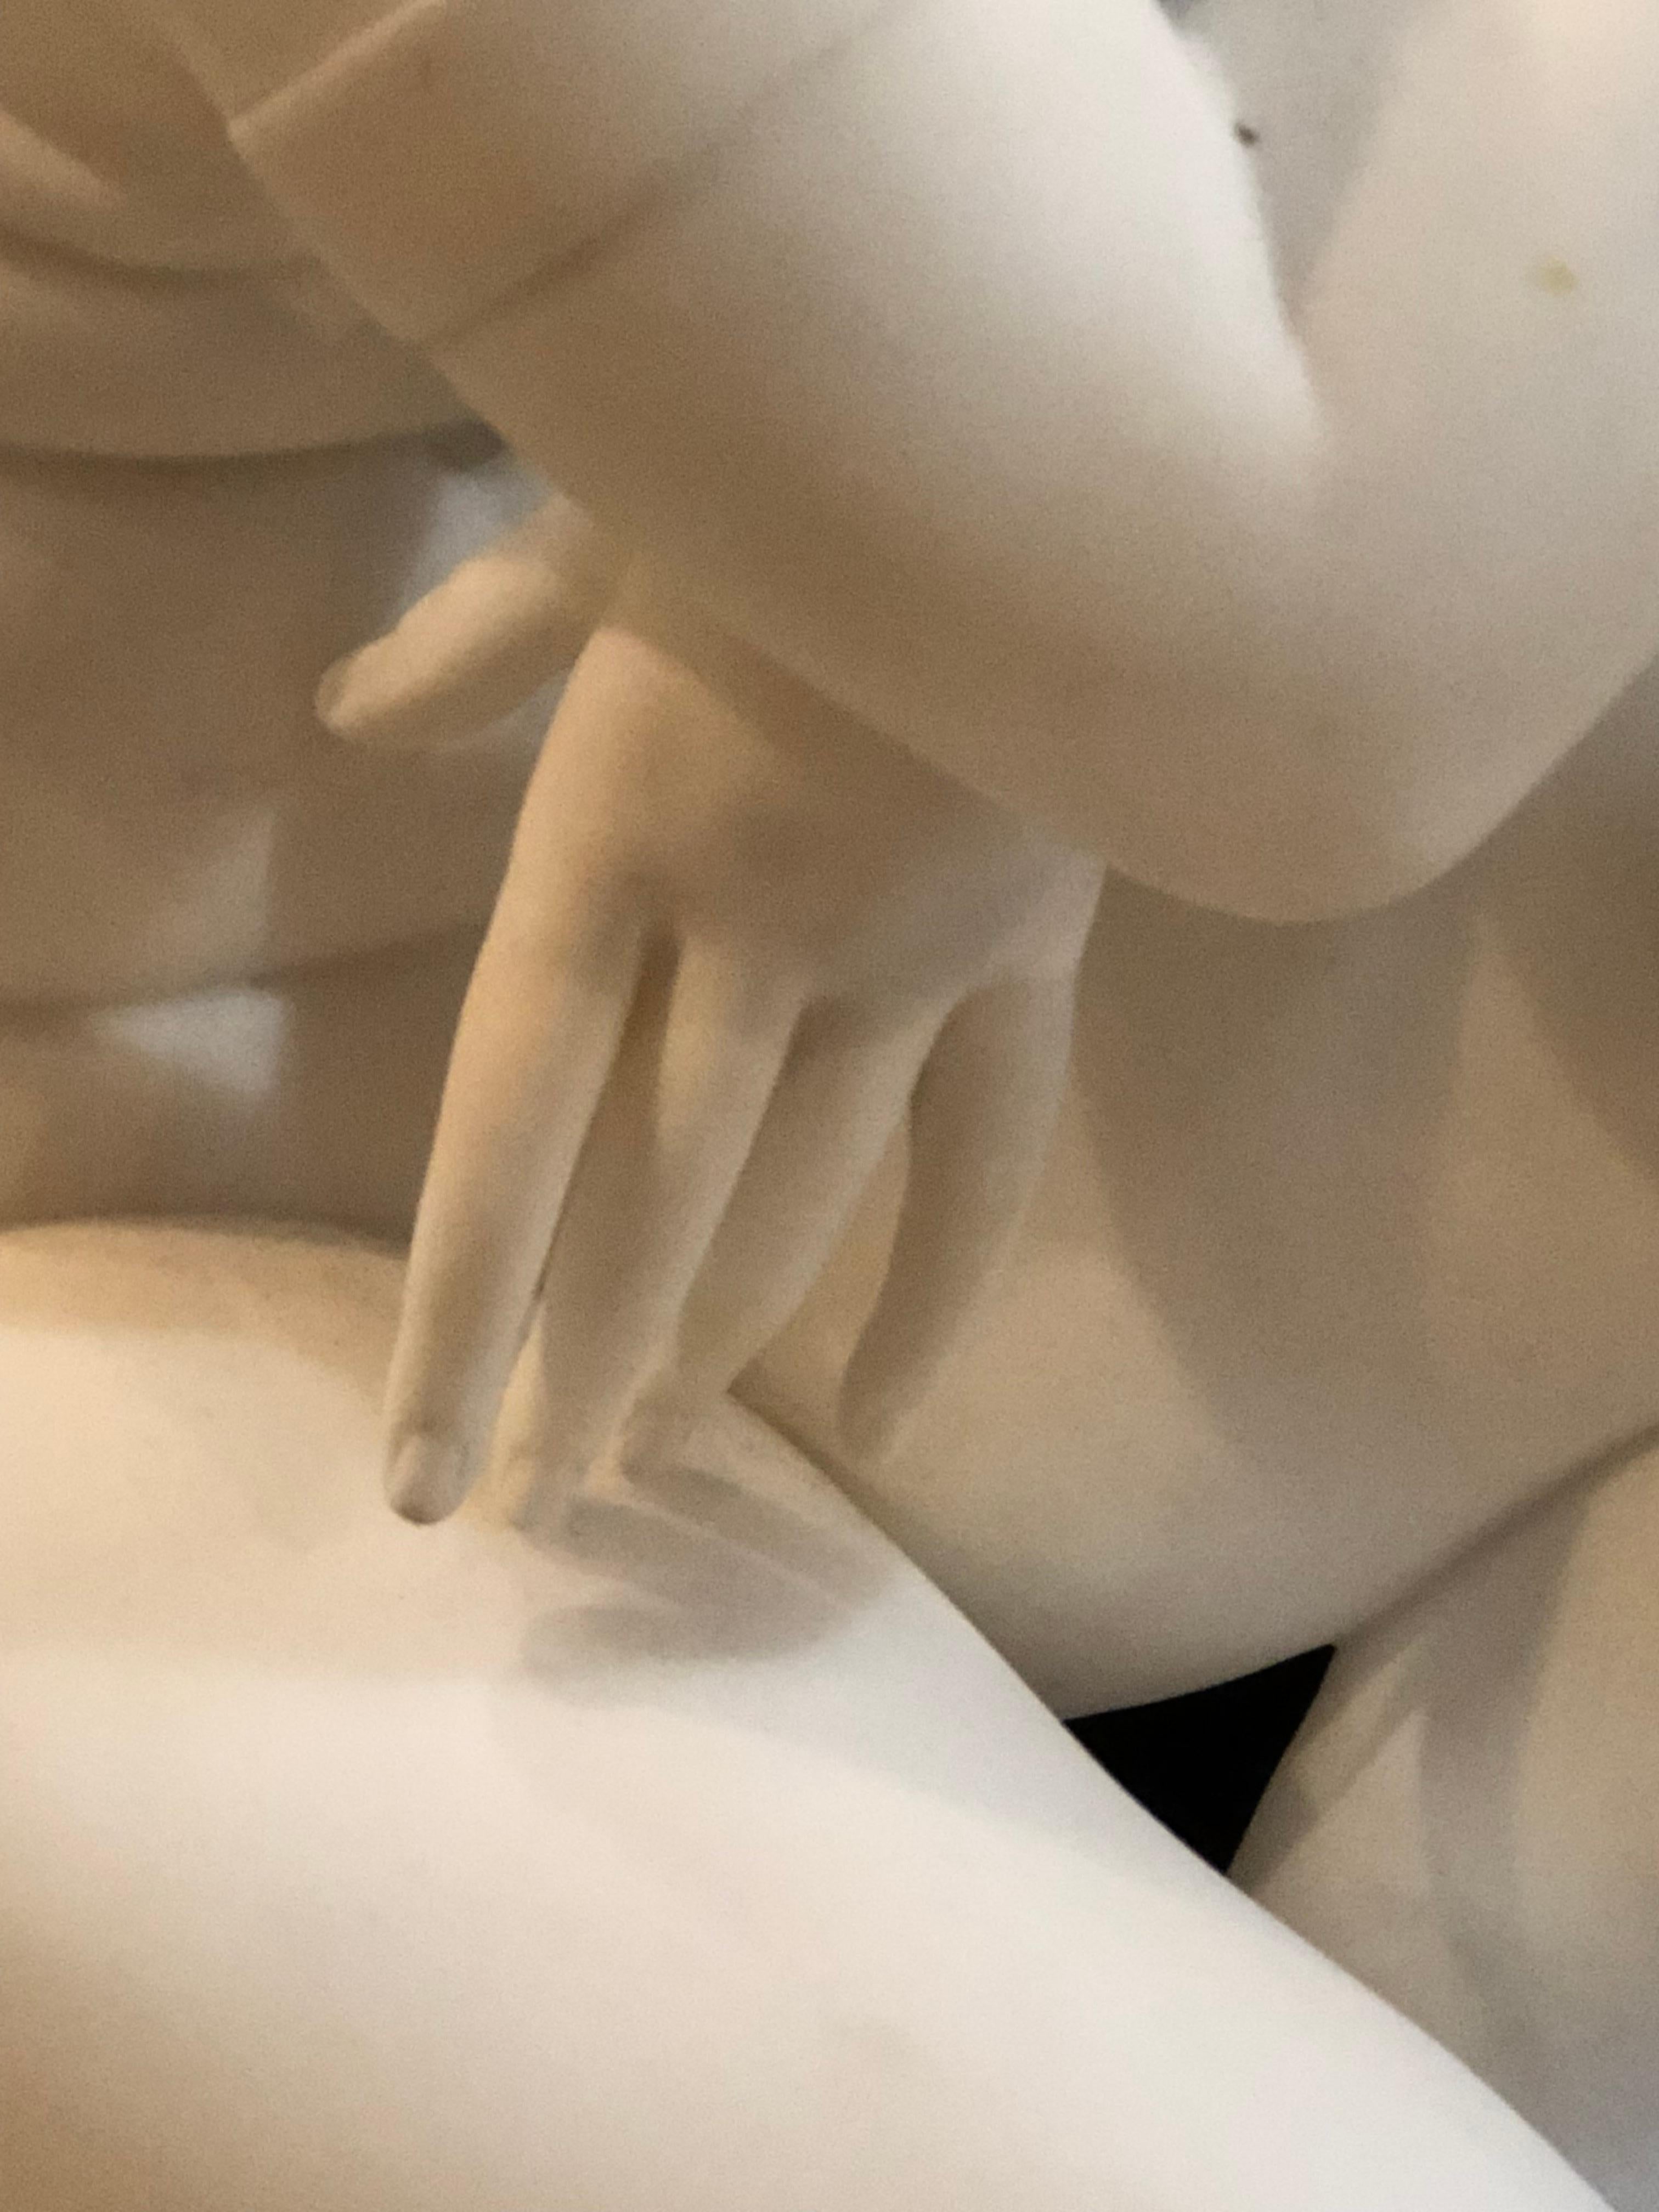 Italian 19th Century White Carrara Marble of a Nude Life Size Figure Kneeling